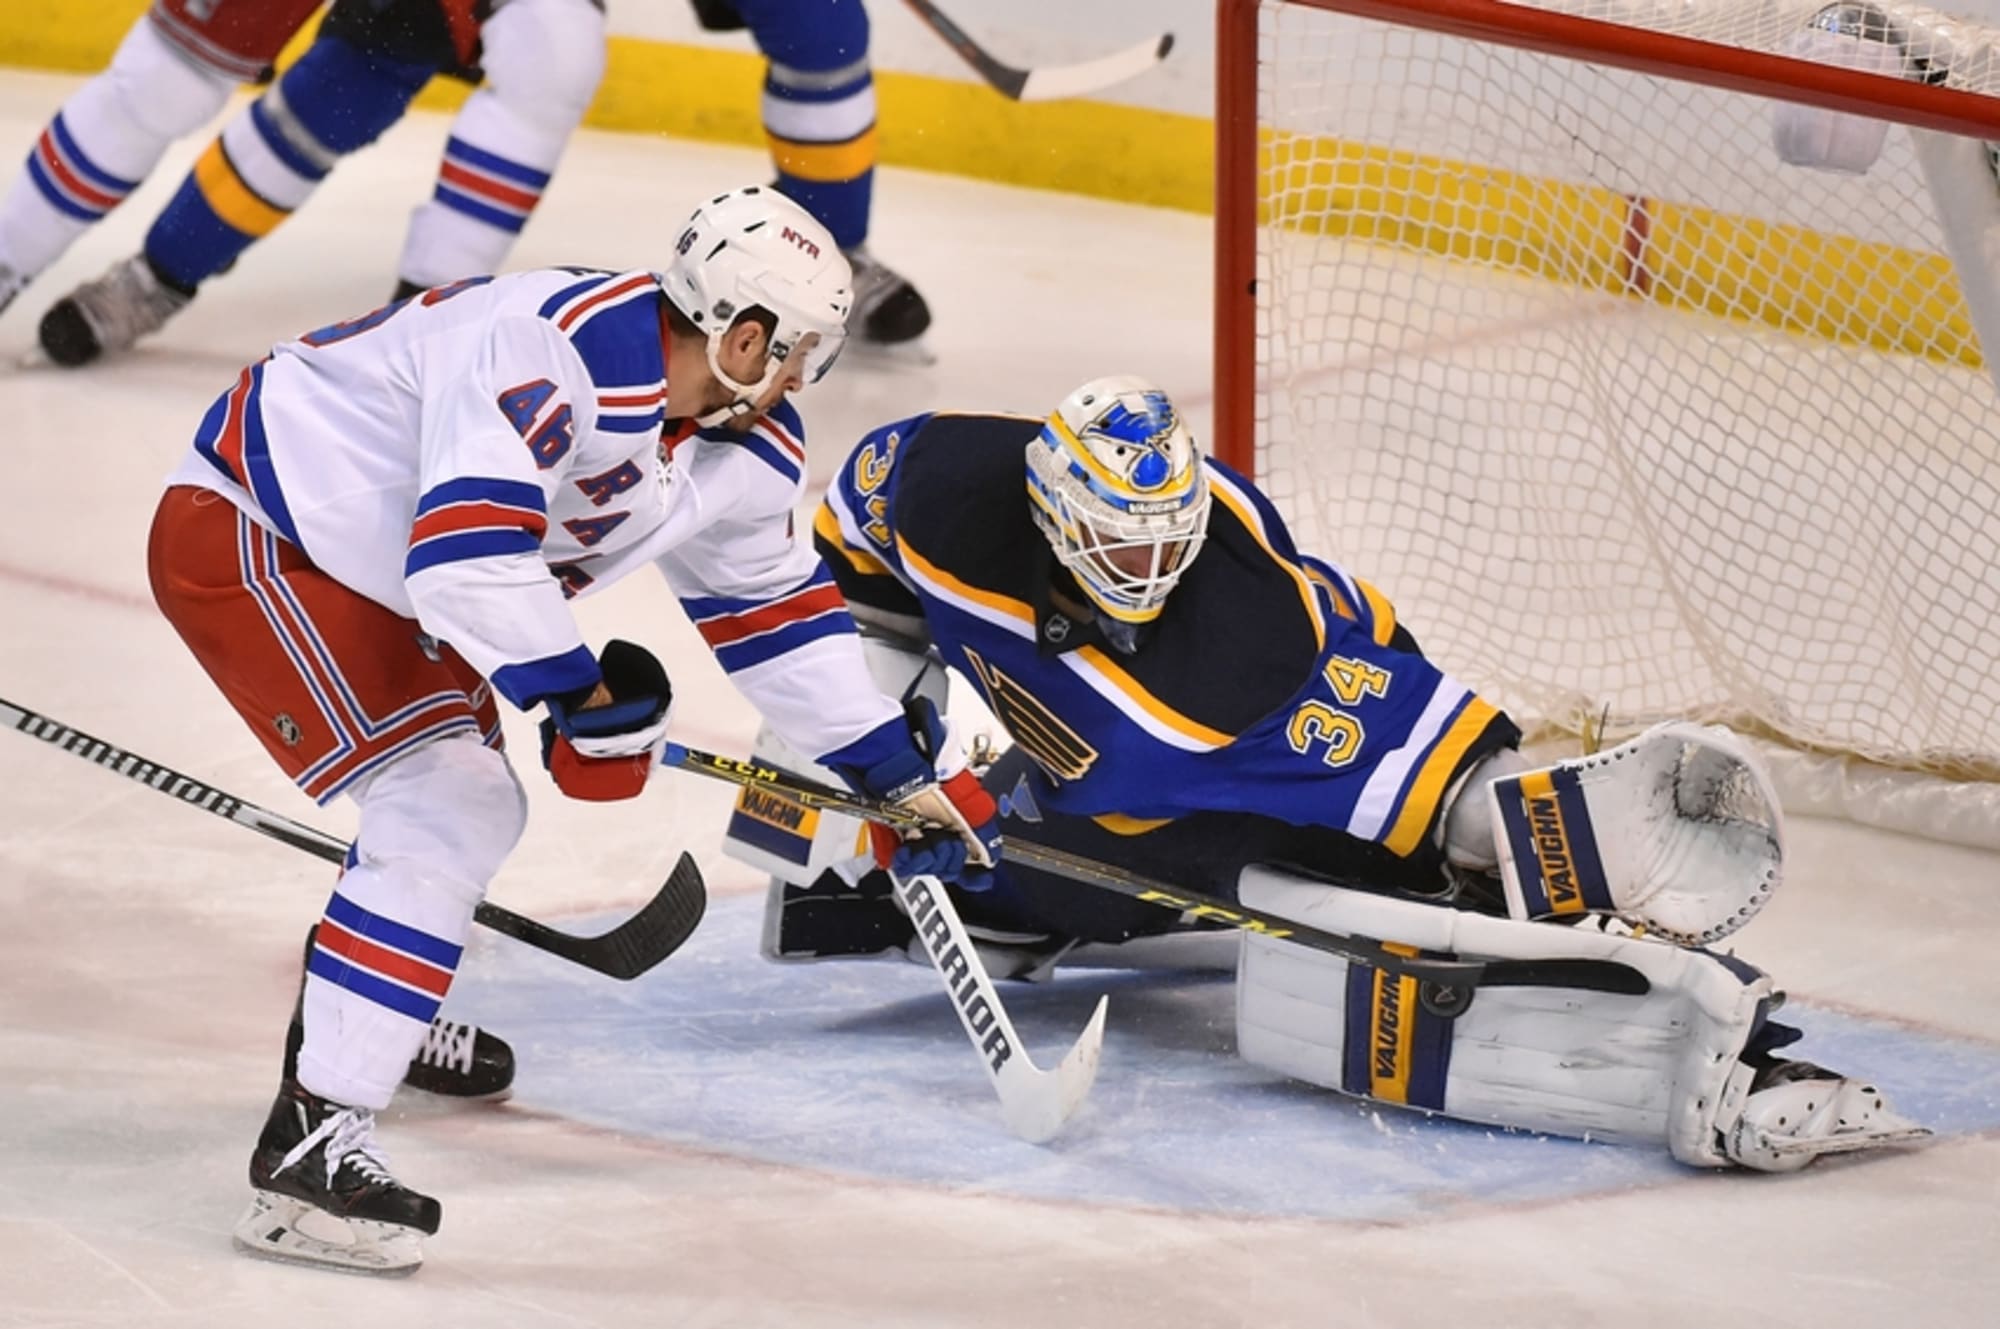 St. Louis Blues vs New York Rangers Live Stream: Watch NHL Online